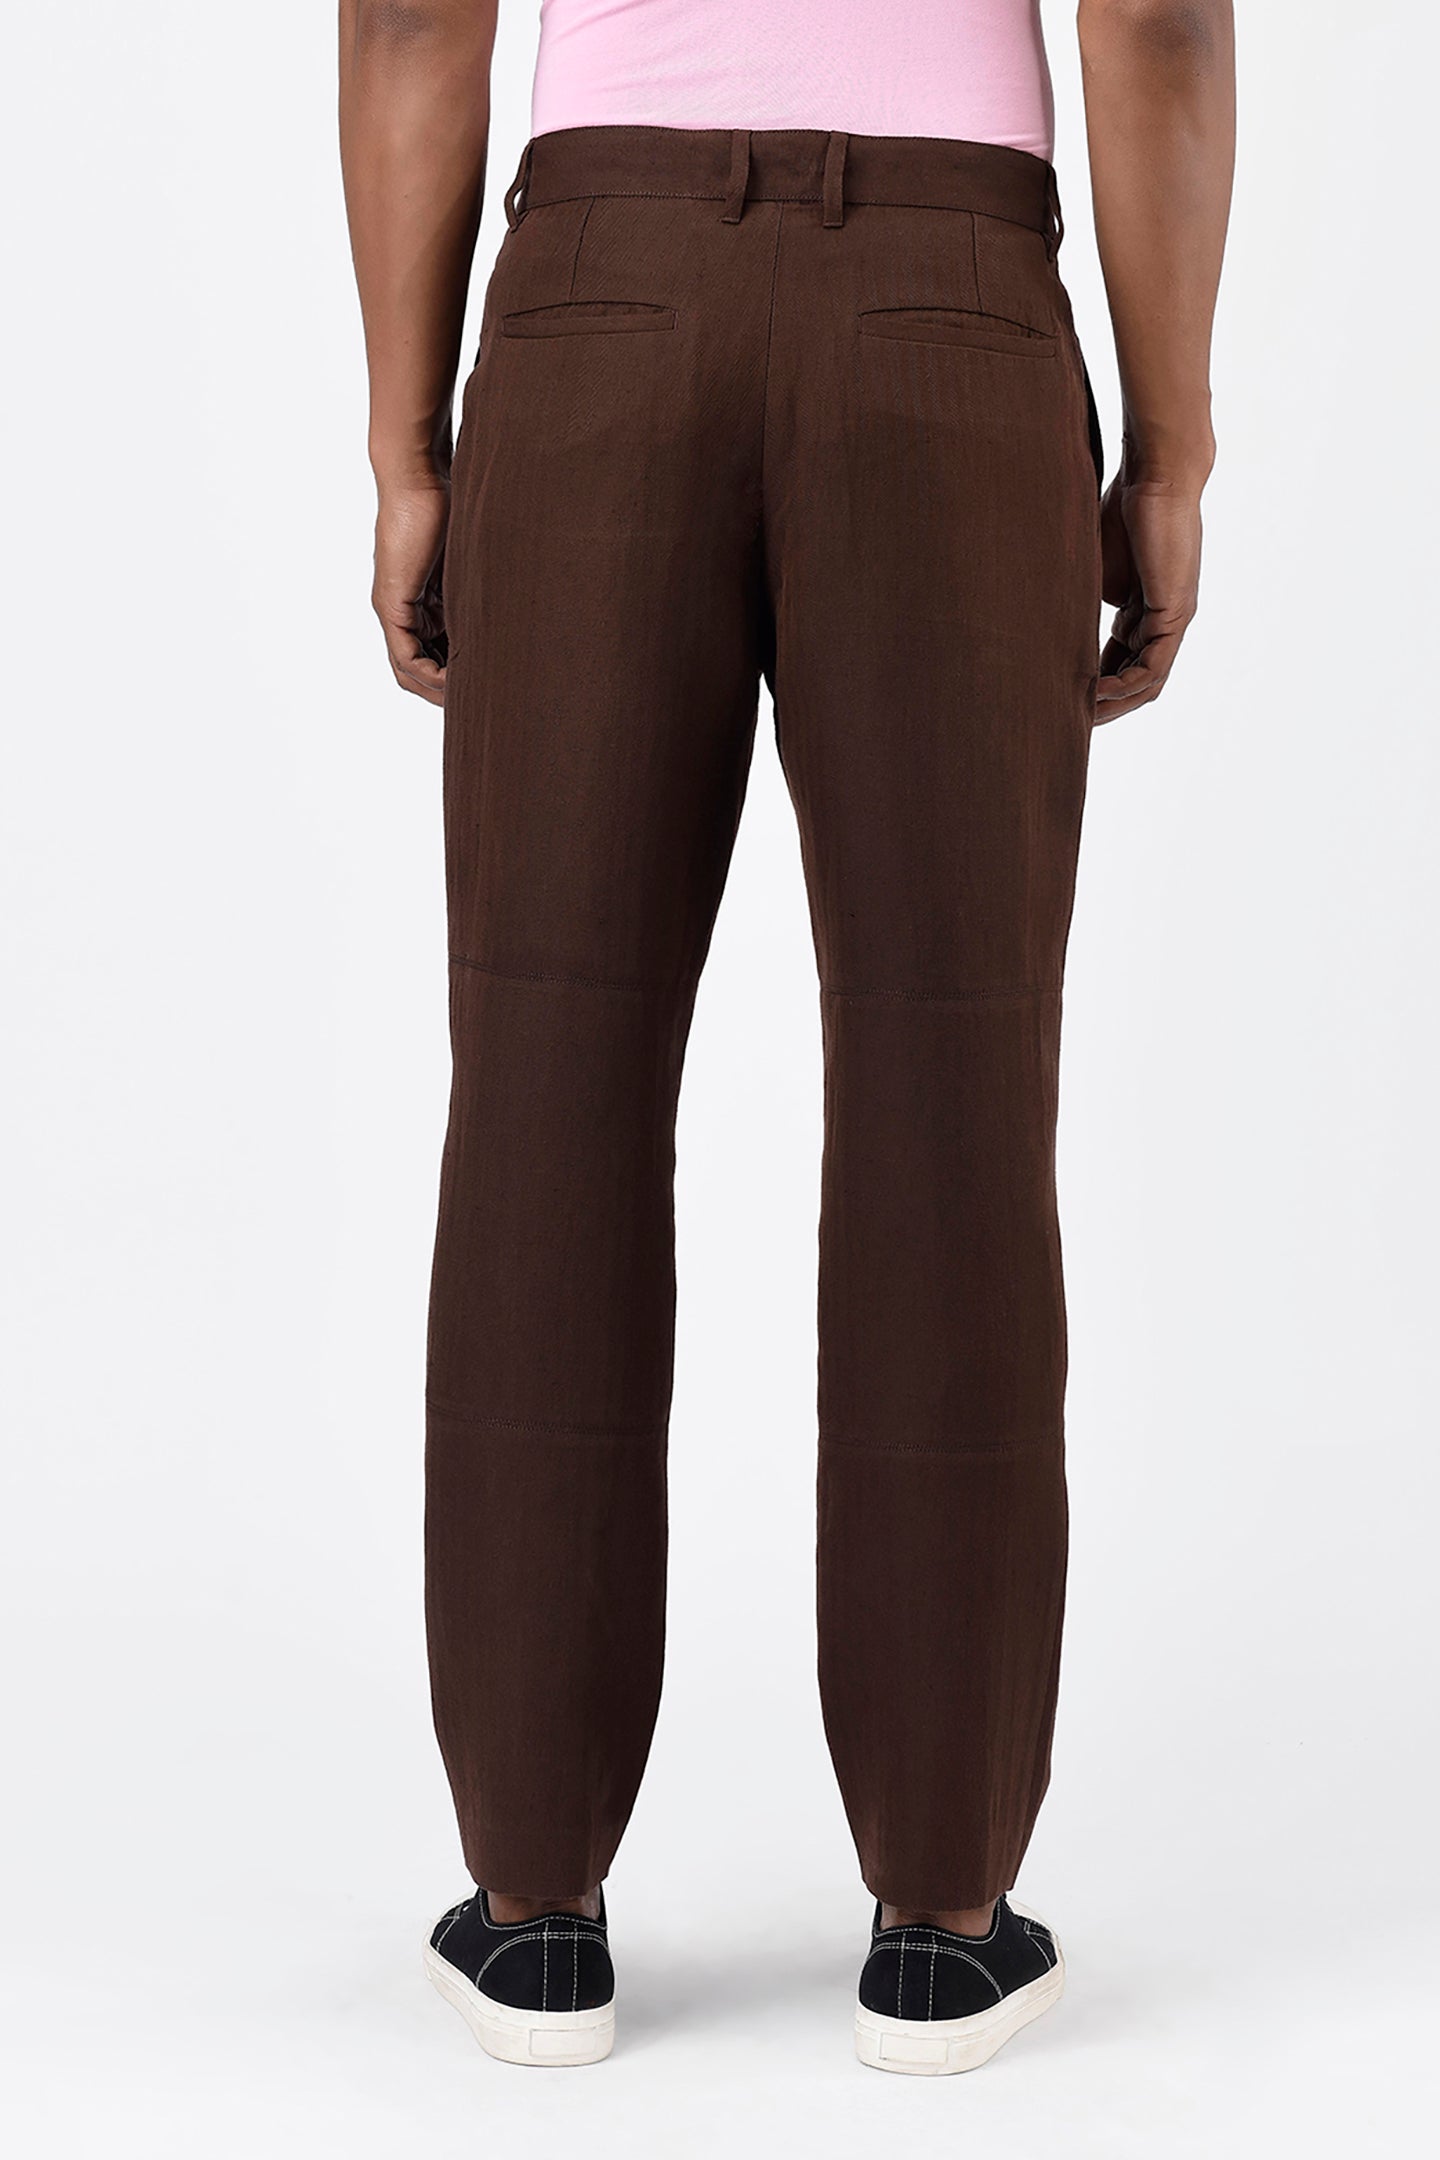 Umber Brown Mens Linen Trousers